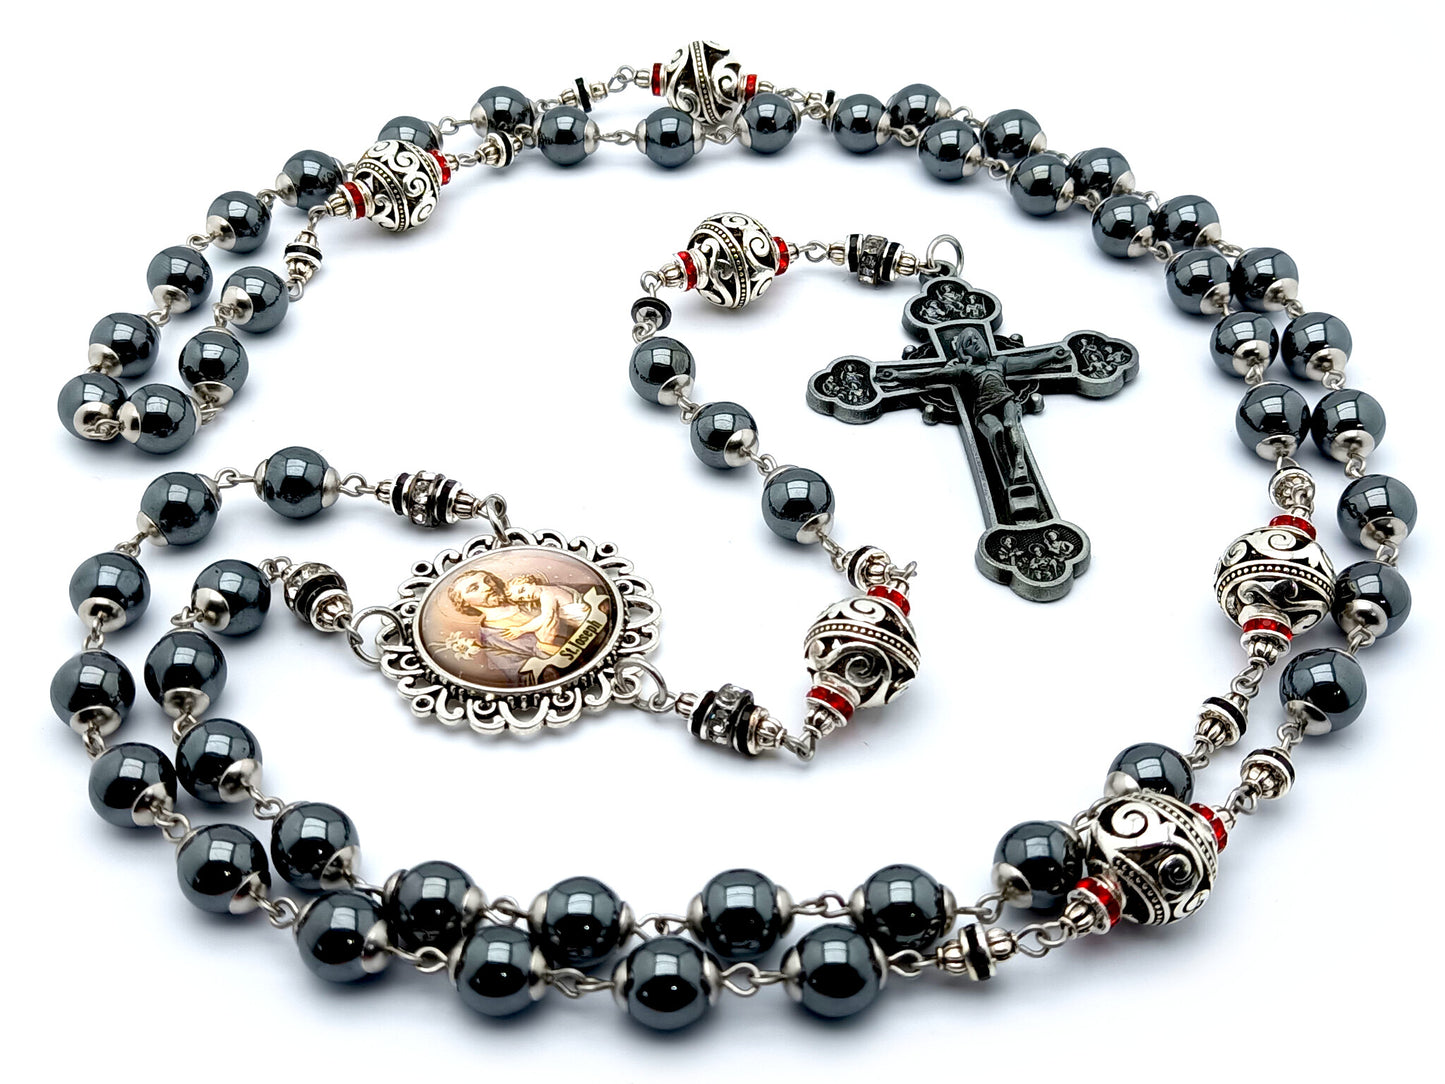 Saint Joseph hematite and silver rosary beads with twelve apostles pewter crucifix.